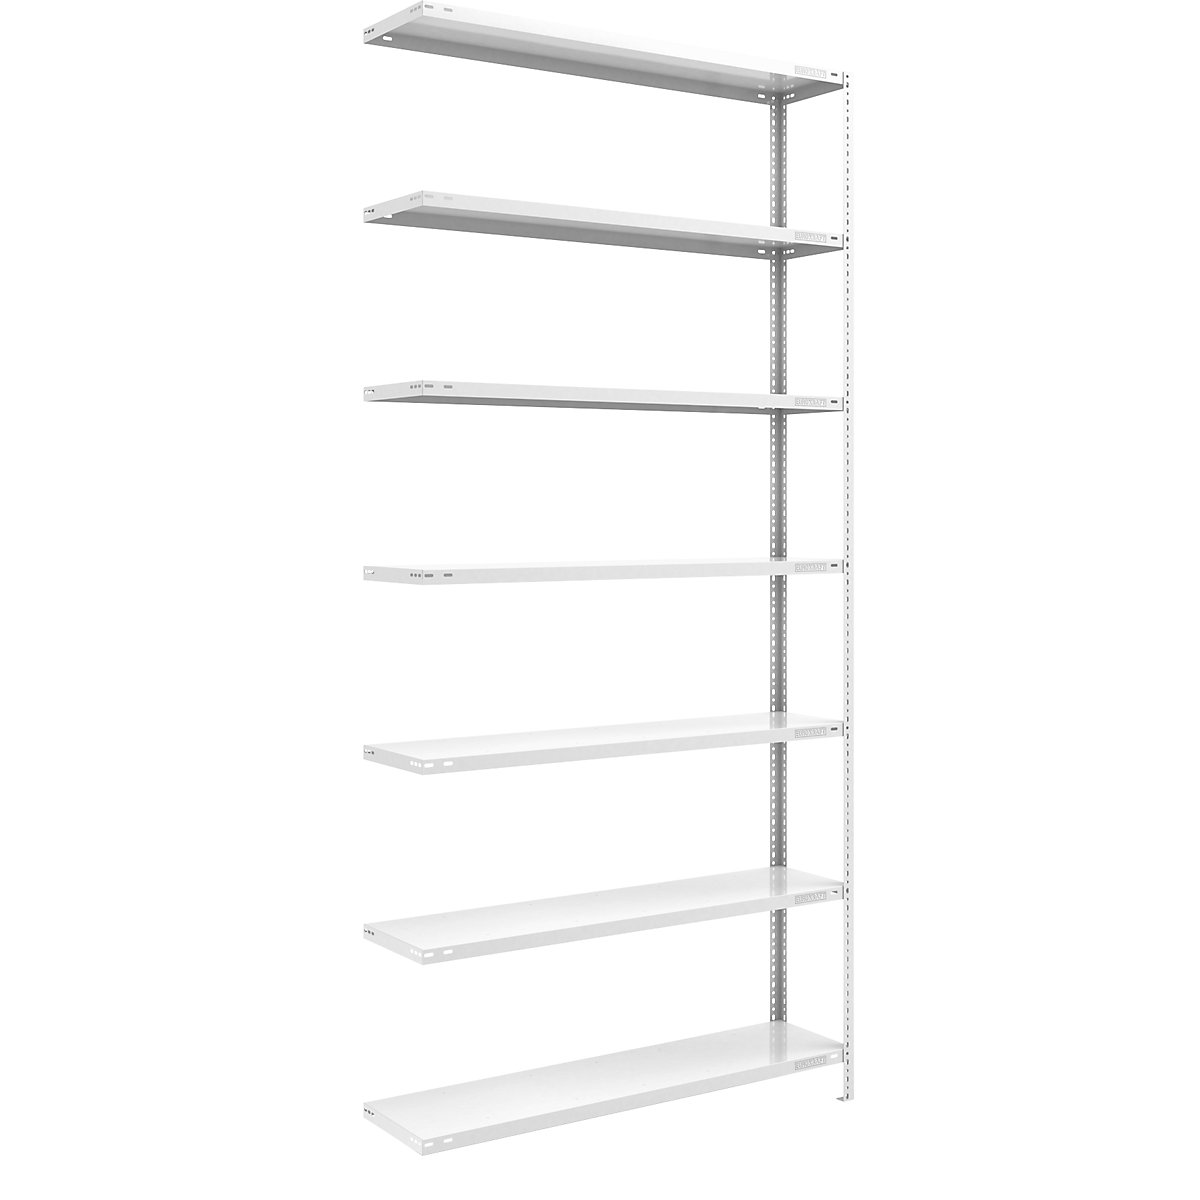 Bolt-together shelf unit, light duty, plastic coated – eurokraft pro, shelf unit height 3000 mm, shelf width 1300 mm, depth 400 mm, extension shelf unit-9